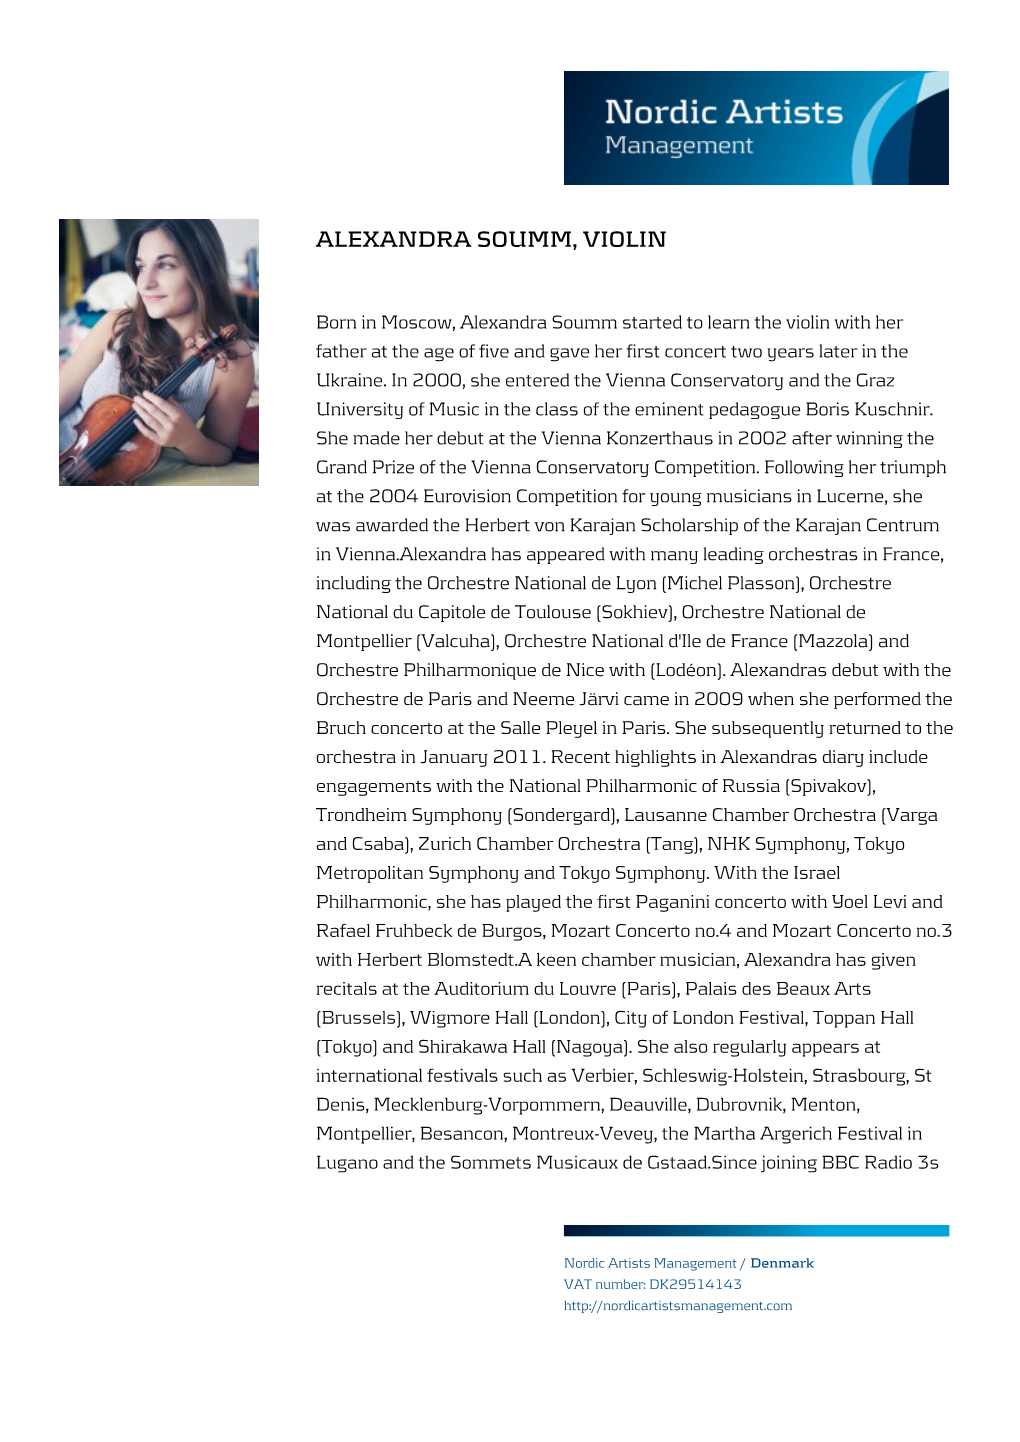 Alexandra Soumm, Violin